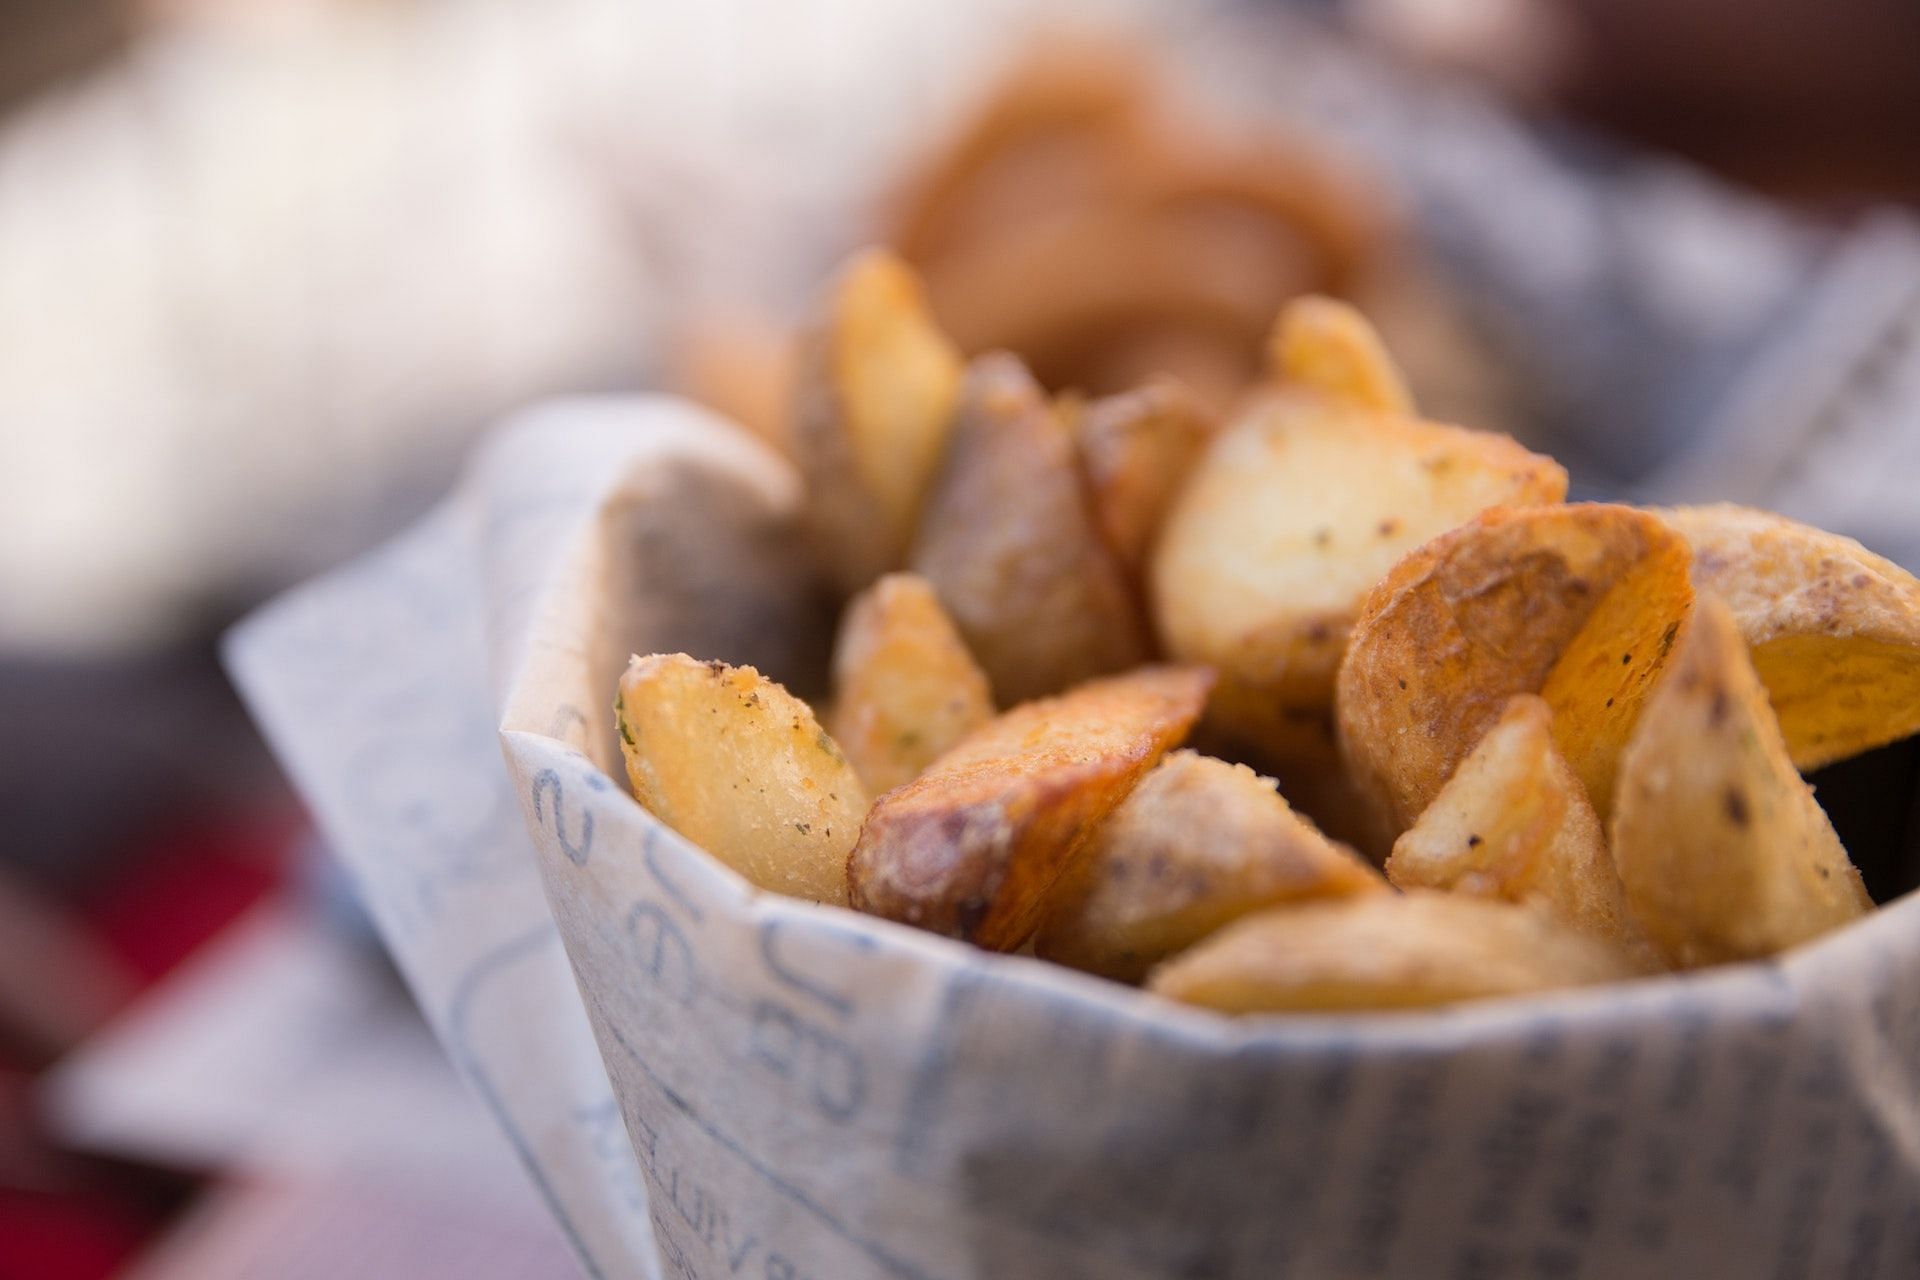 Chips must be avoided in a sore throat. (Photo via Pexels/Georgiana Mirela)